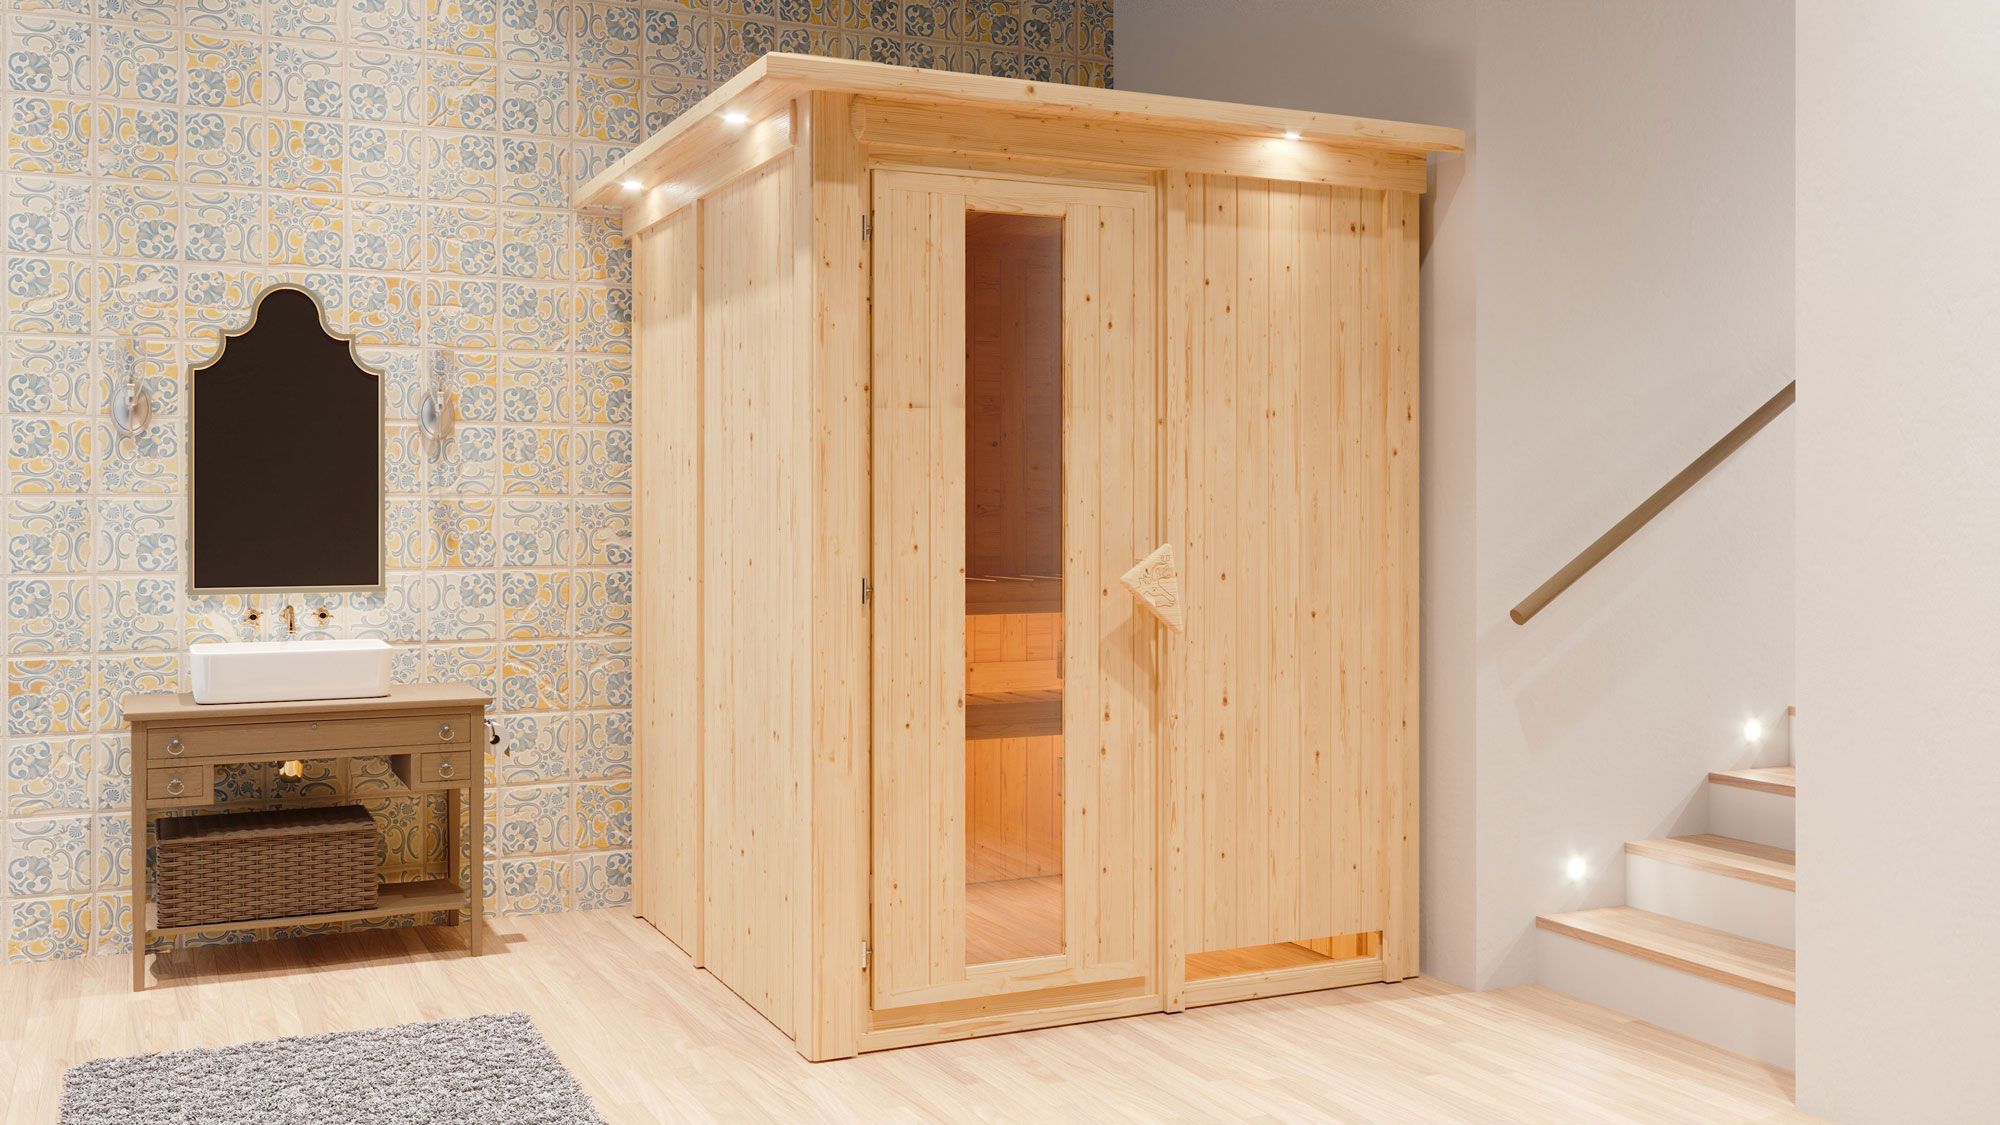 Niilo" sauna met energiebesparende deur en rand & 3 LED spots Kleur: Naturel - 165 x 165 x 202 cm (B x D x H)